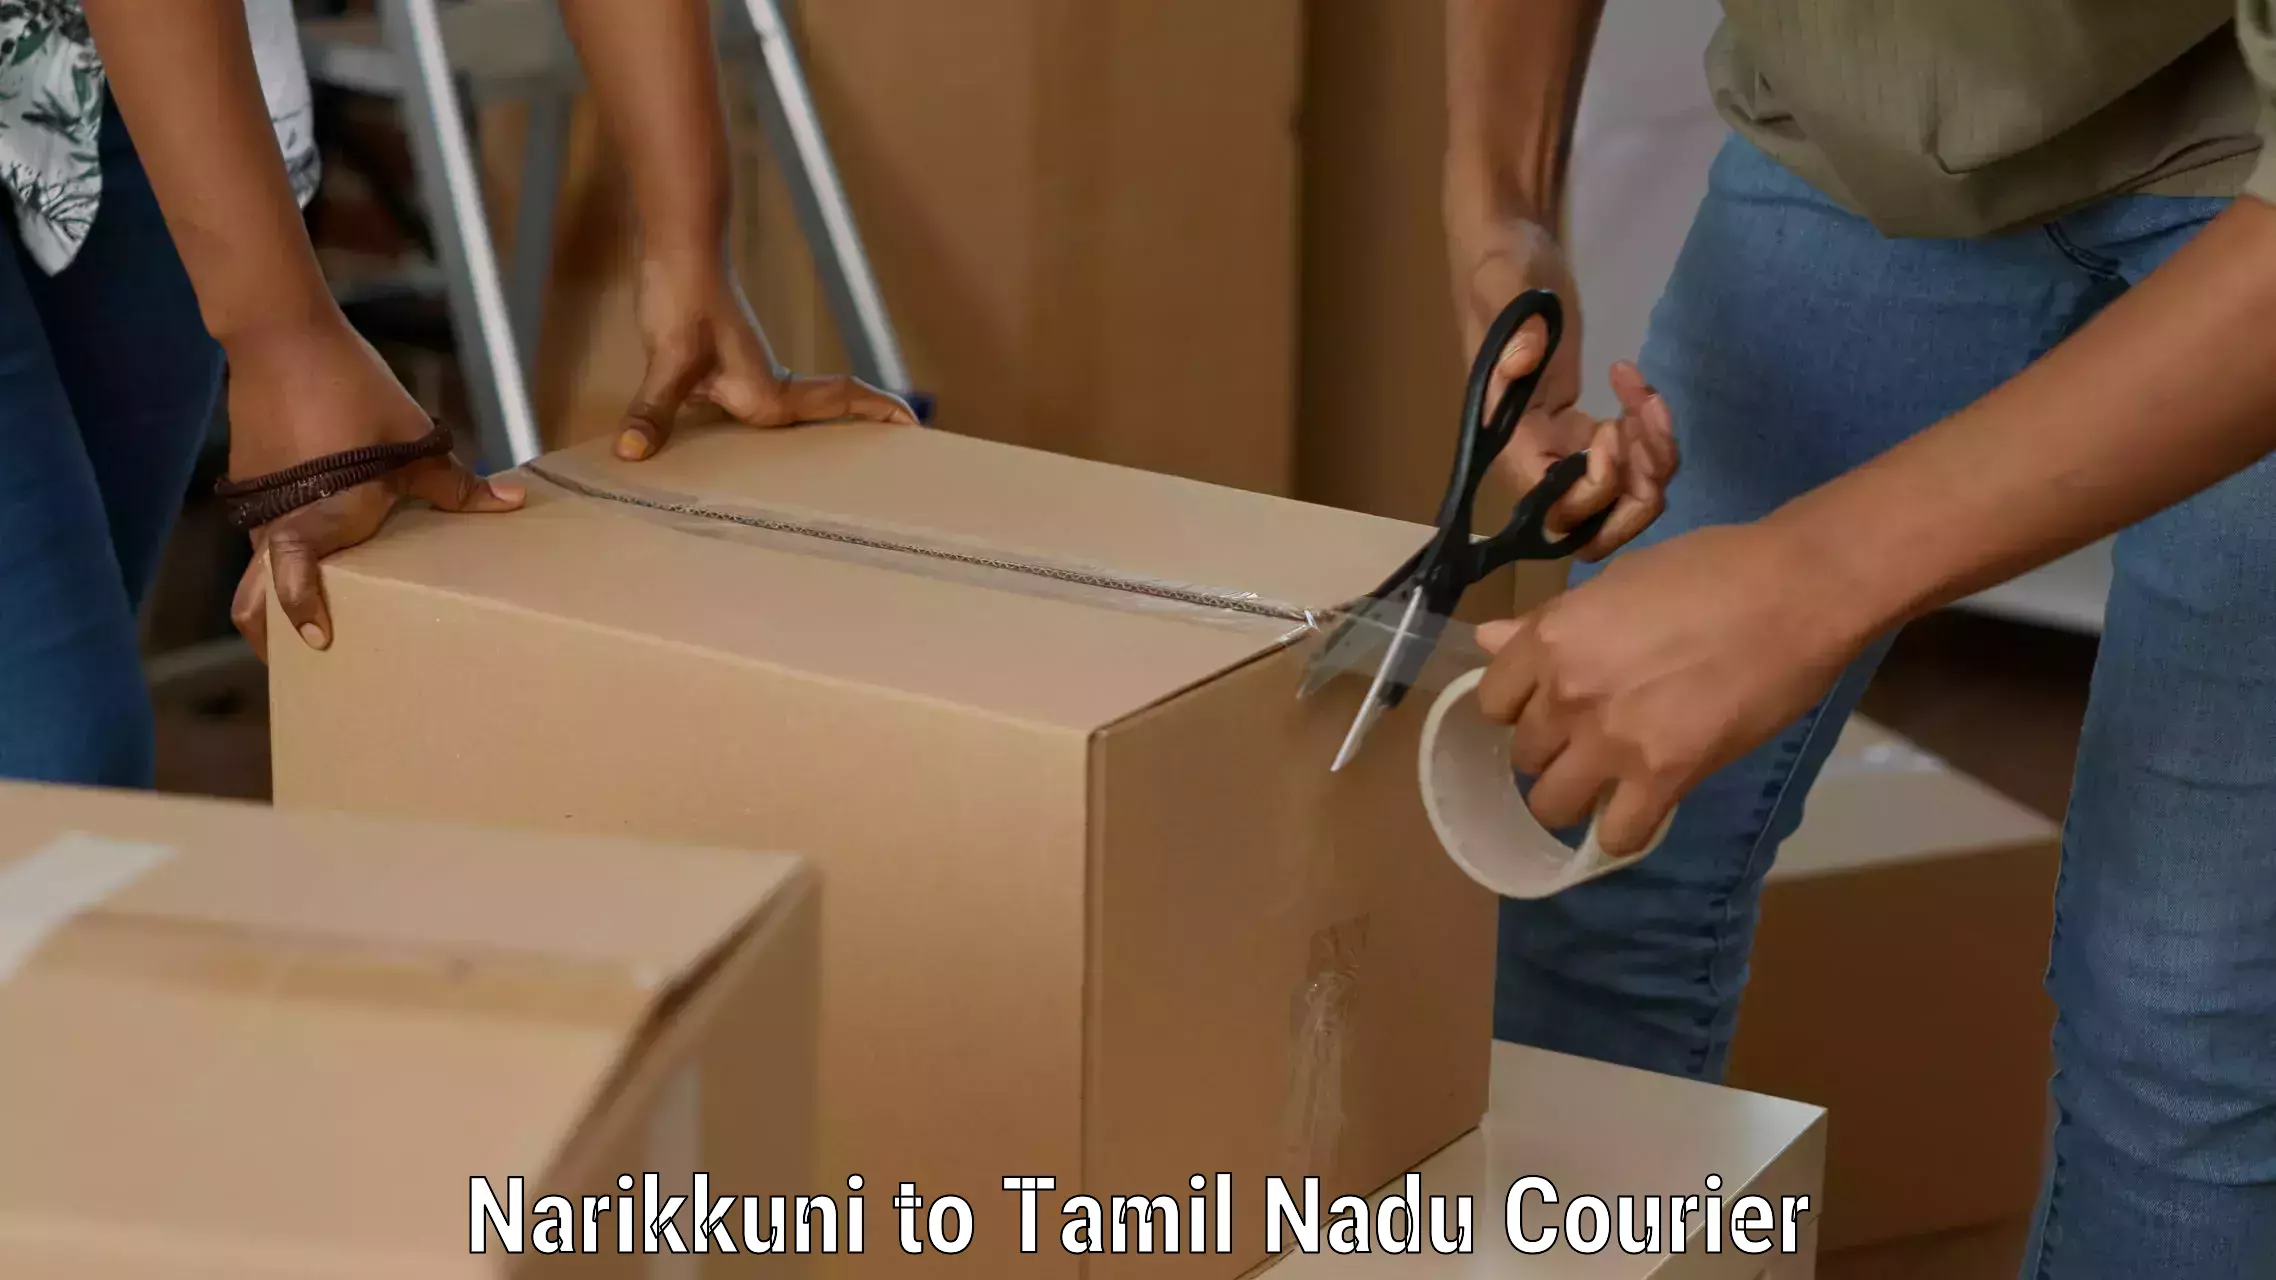 Easy return solutions Narikkuni to Tamil Nadu